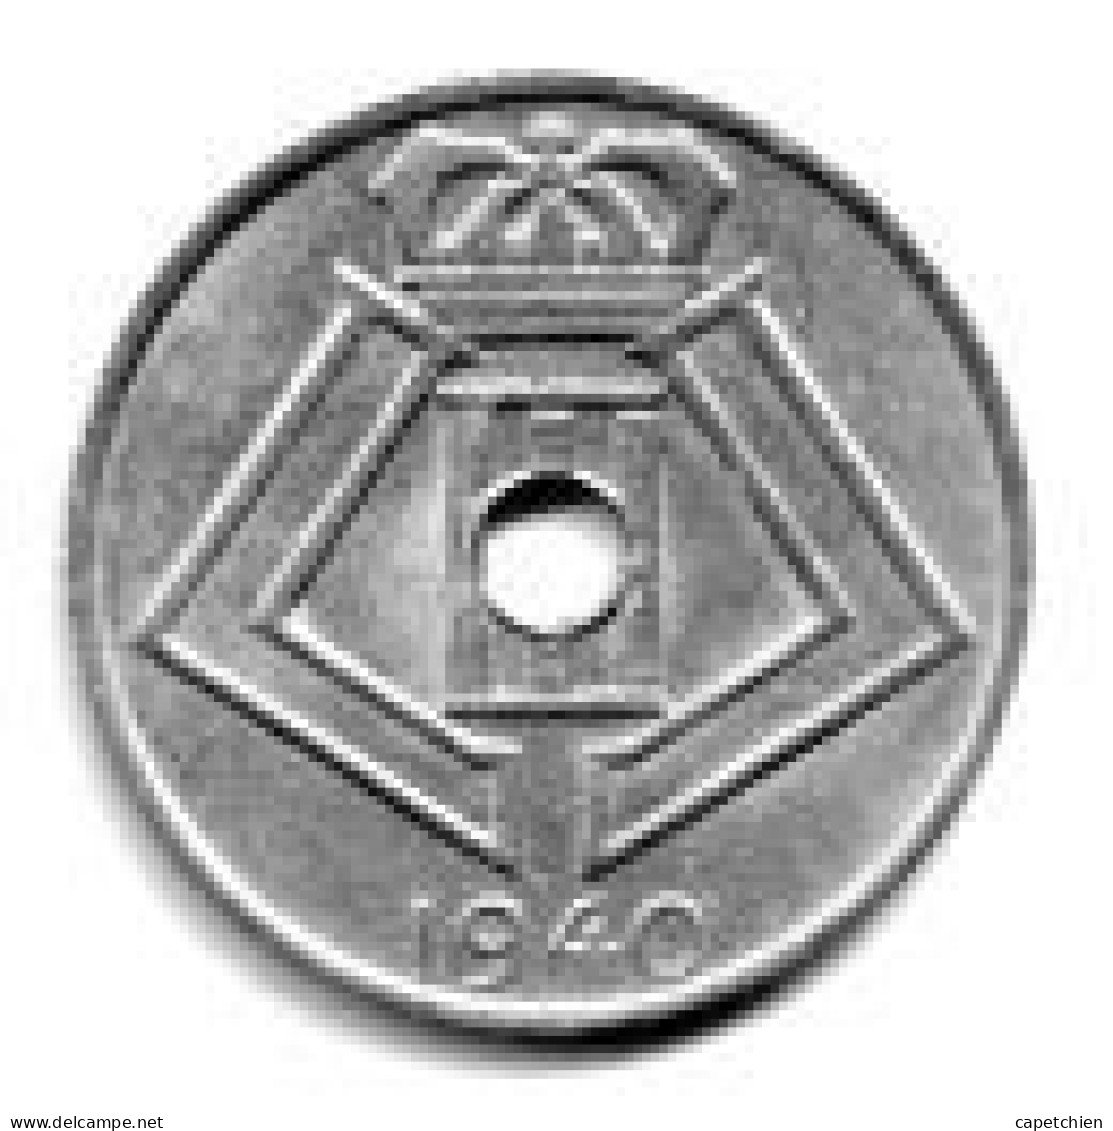 BELGIQUE / BELGIE - BELGIQUE/ 5 CENTIMES  / 1939 / CUPRO NICKEL / 2.58 G / 19 Mm - 10 Centimes & 25 Centimes